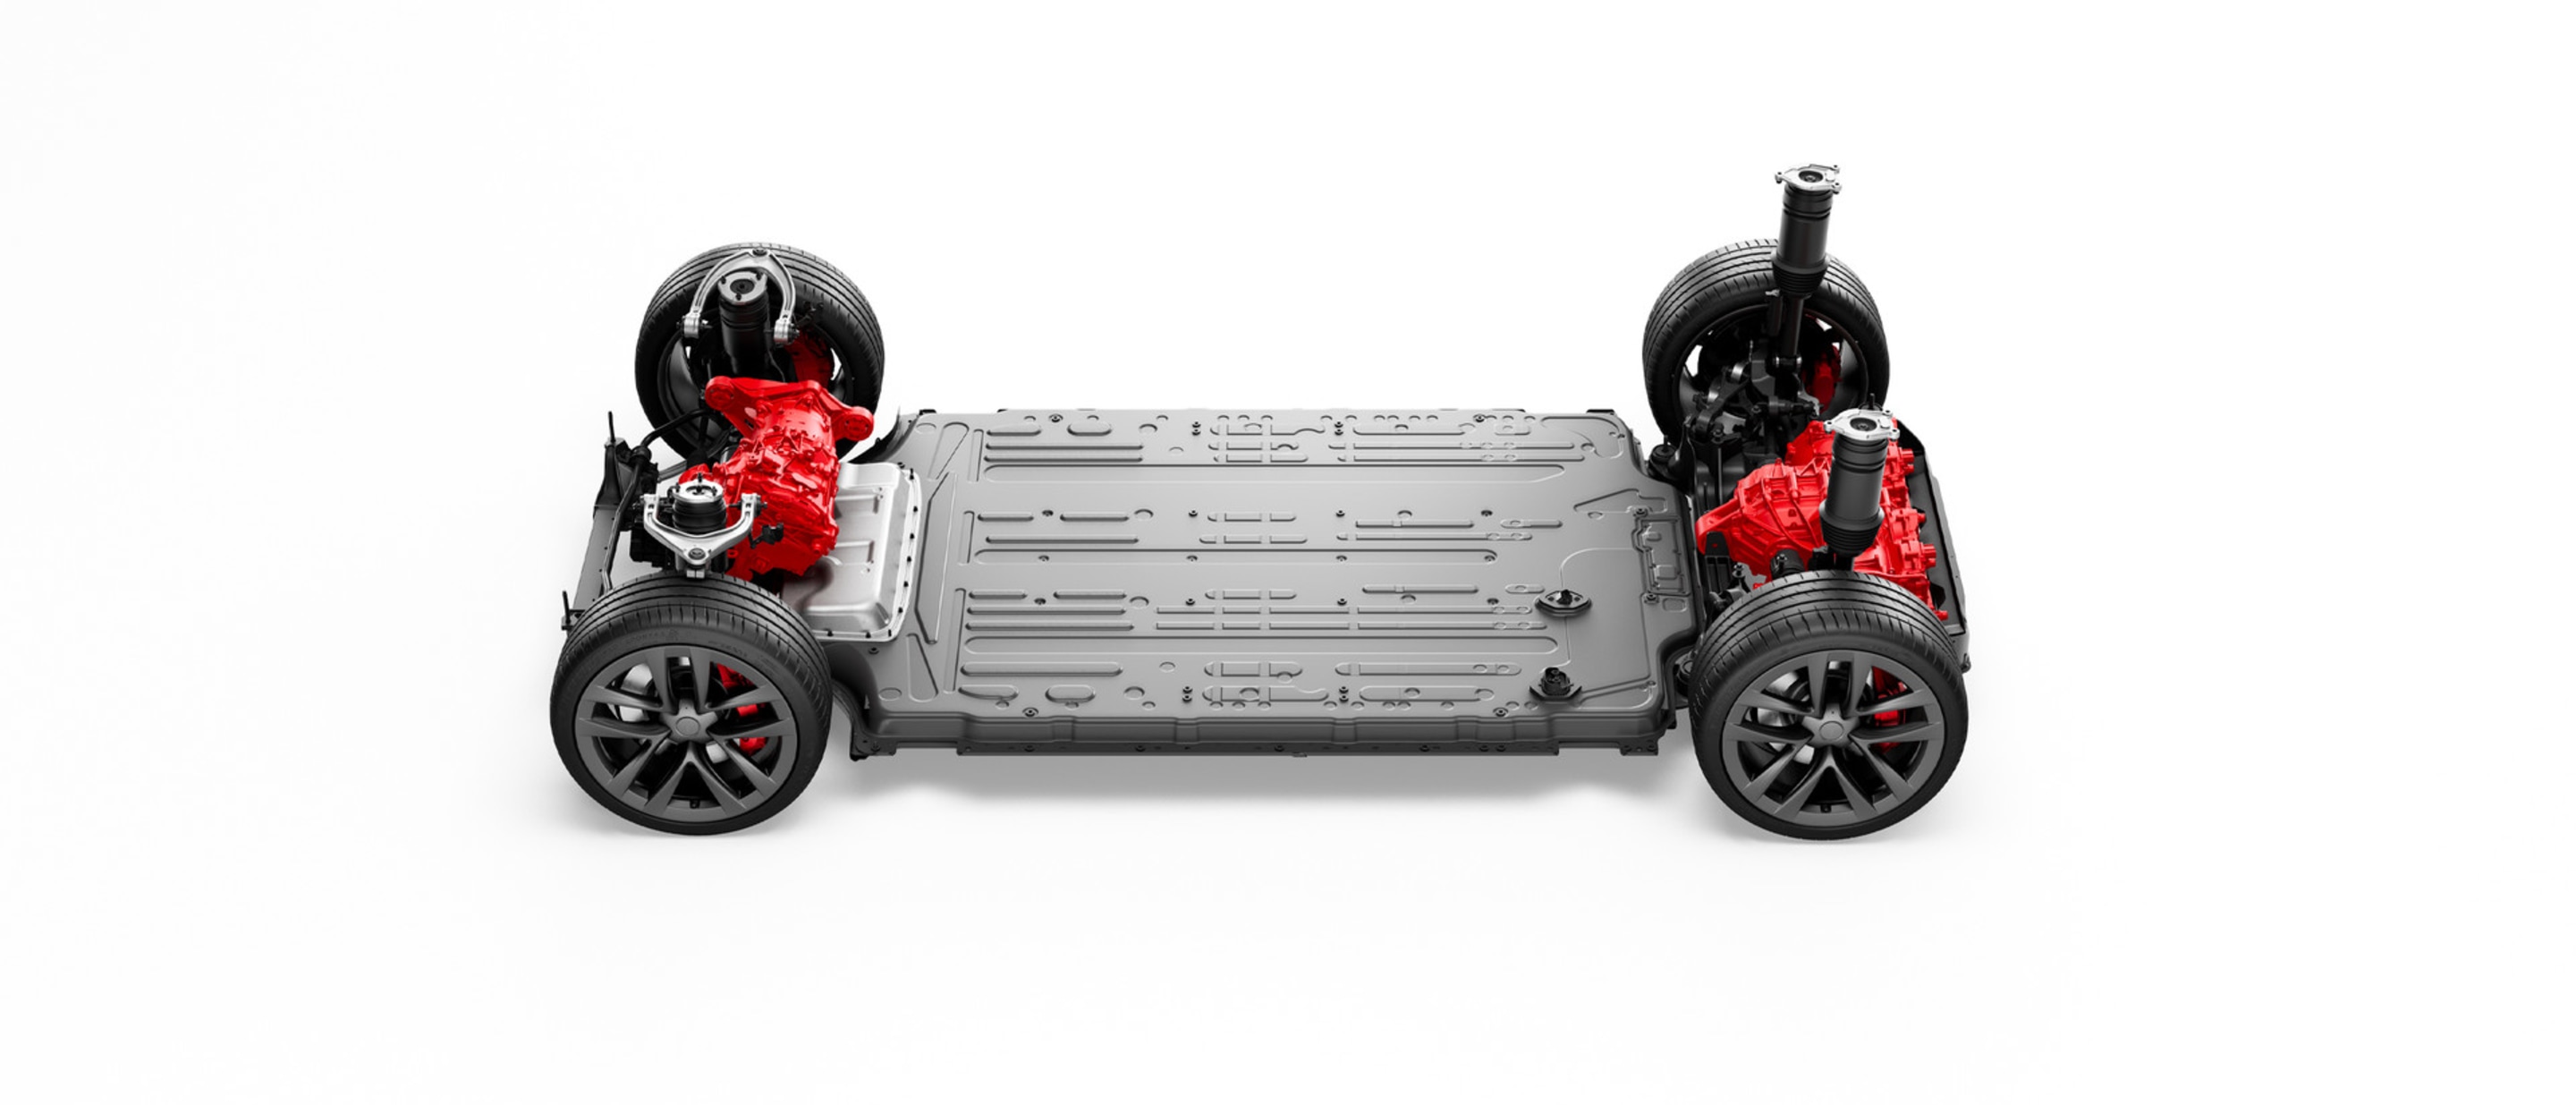 Transmission intégrale Tri-Motor de la Model S